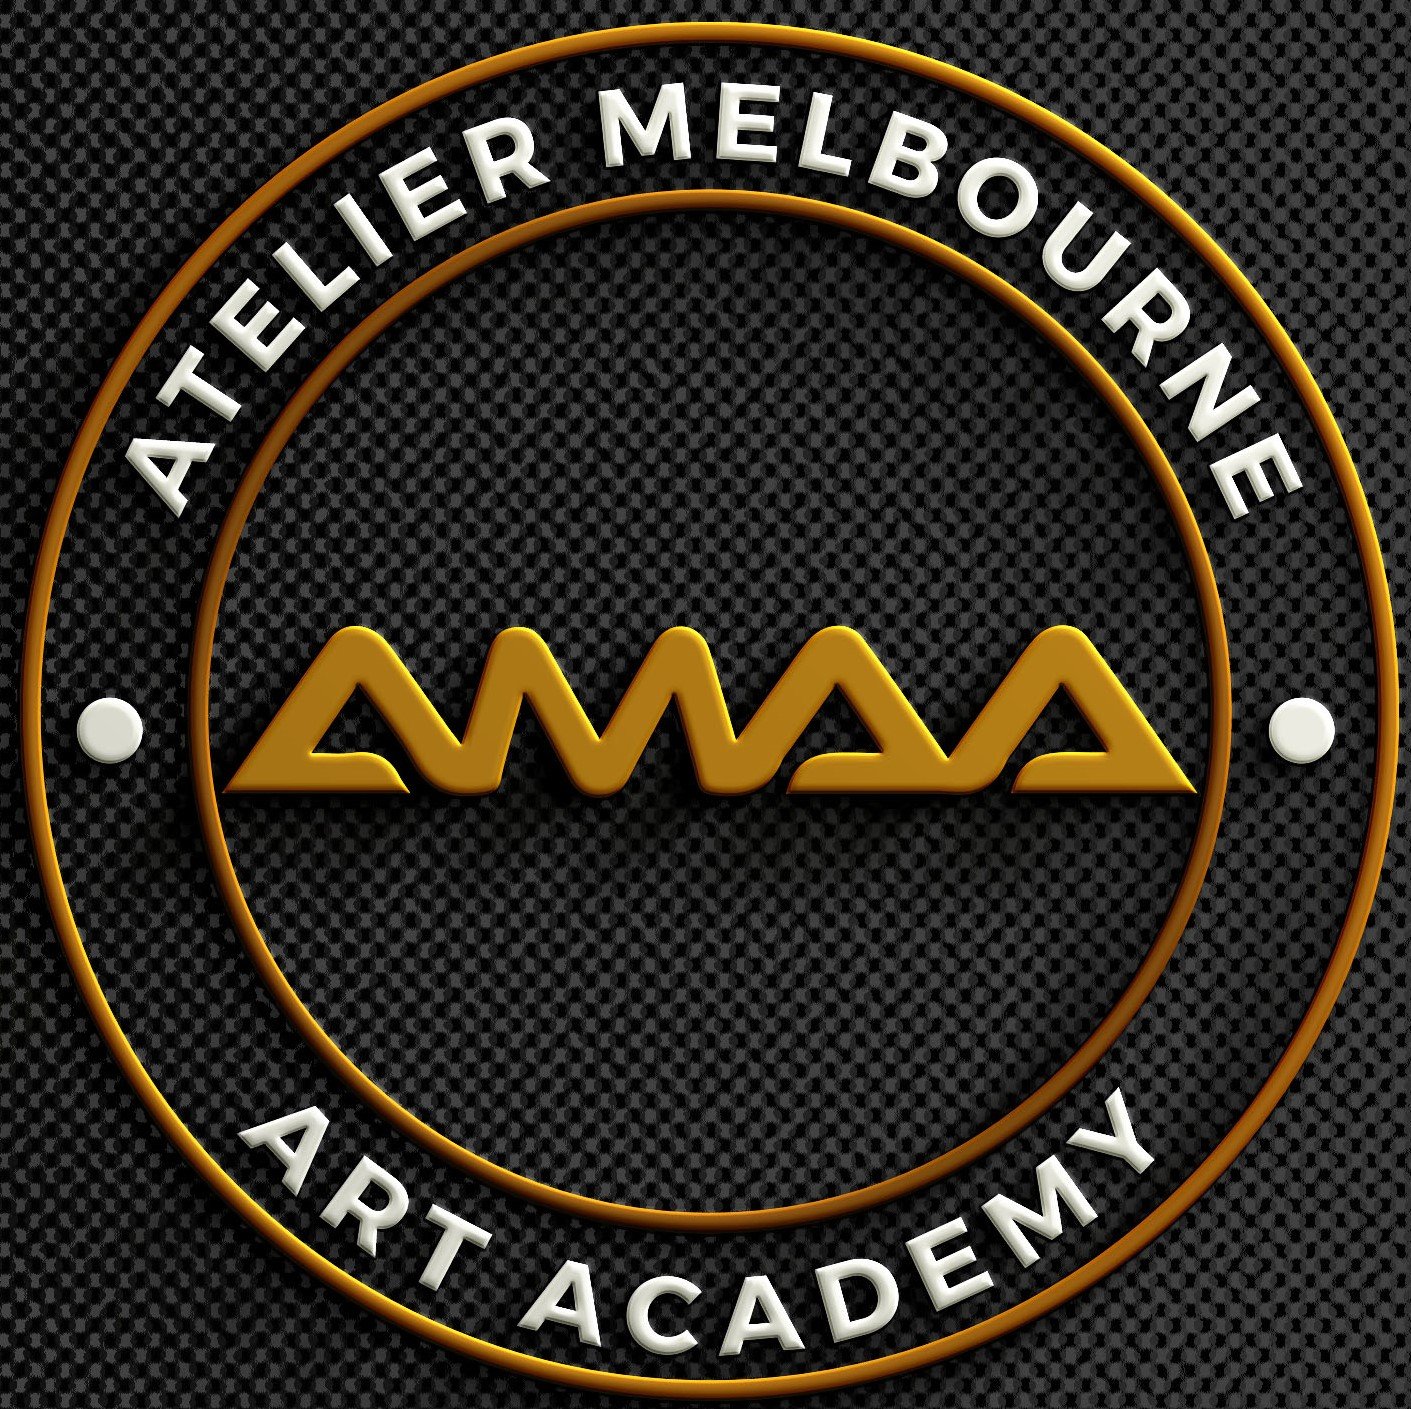 ATELIER MELBOURNE ART ACADEMY